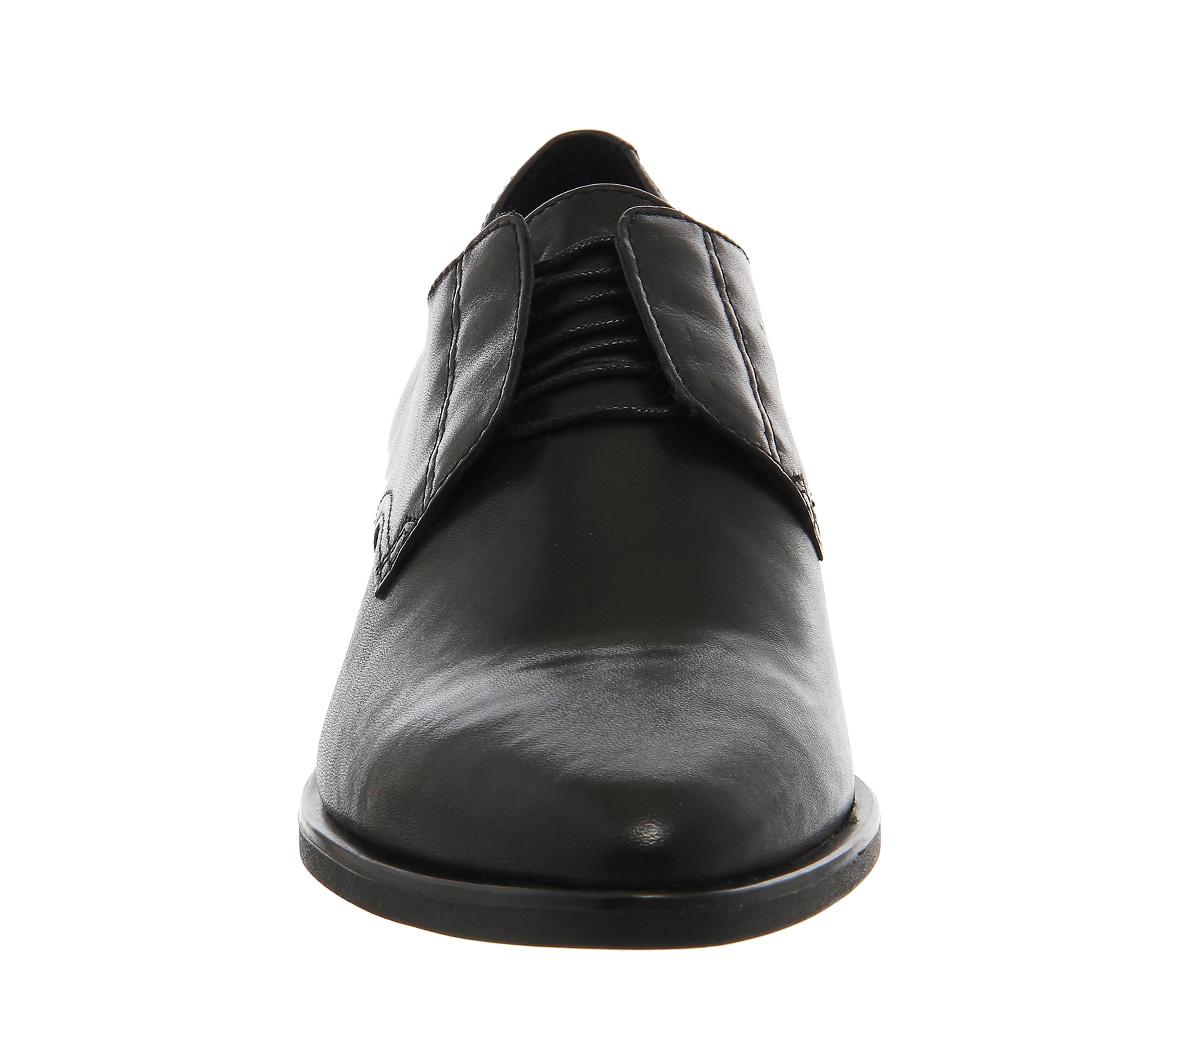 Vagabond Leather Olga Shoe in Black - Lyst